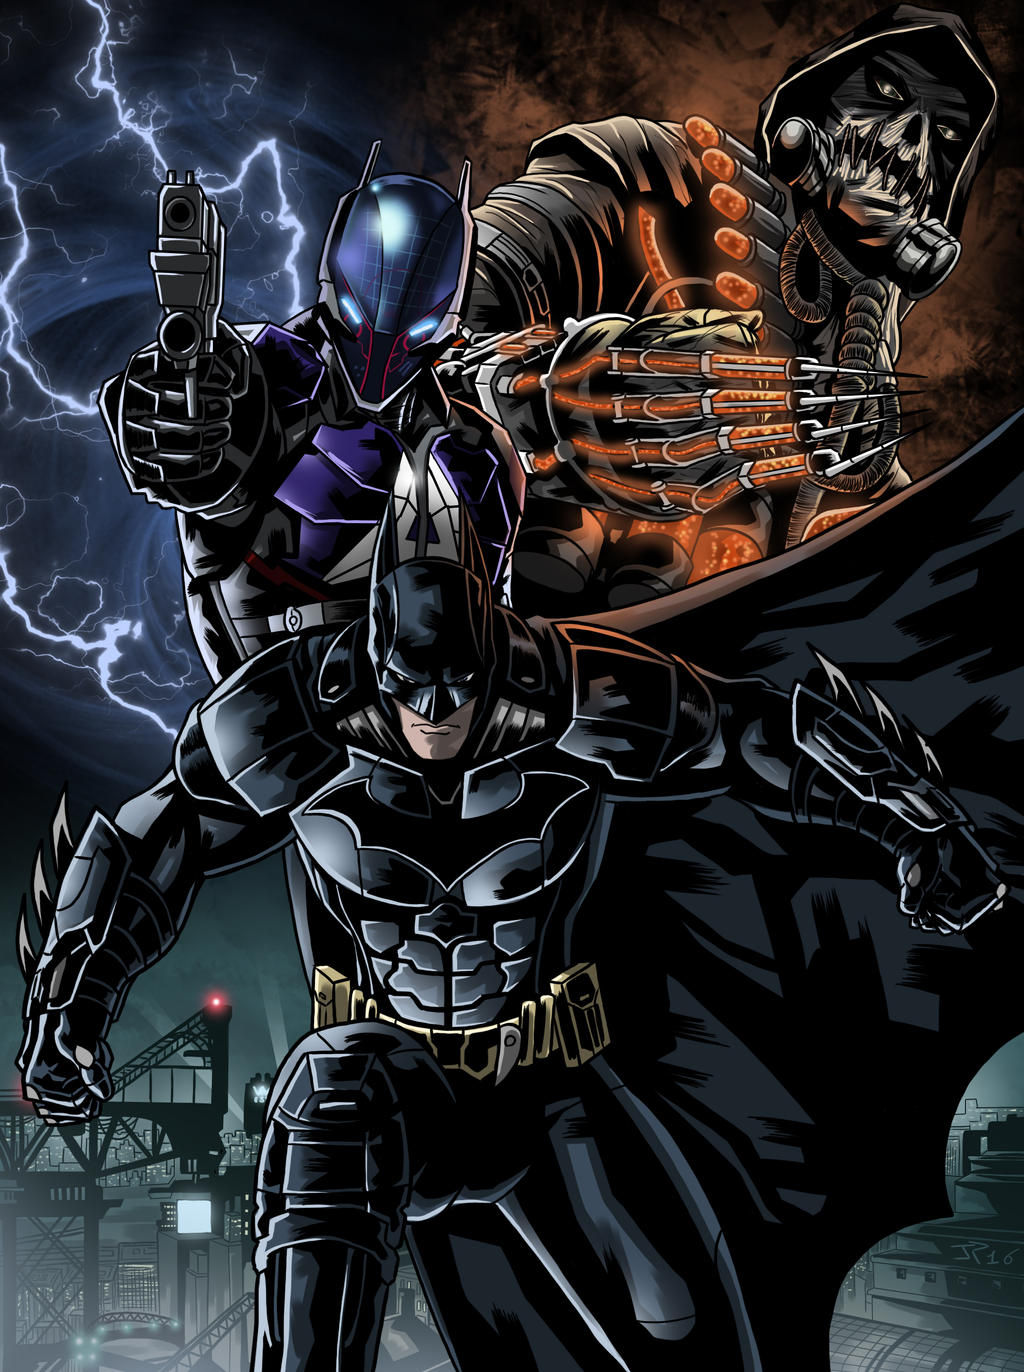 Batman Arkham Knight poster to colors by JonathanPiccini-JP on DeviantArt